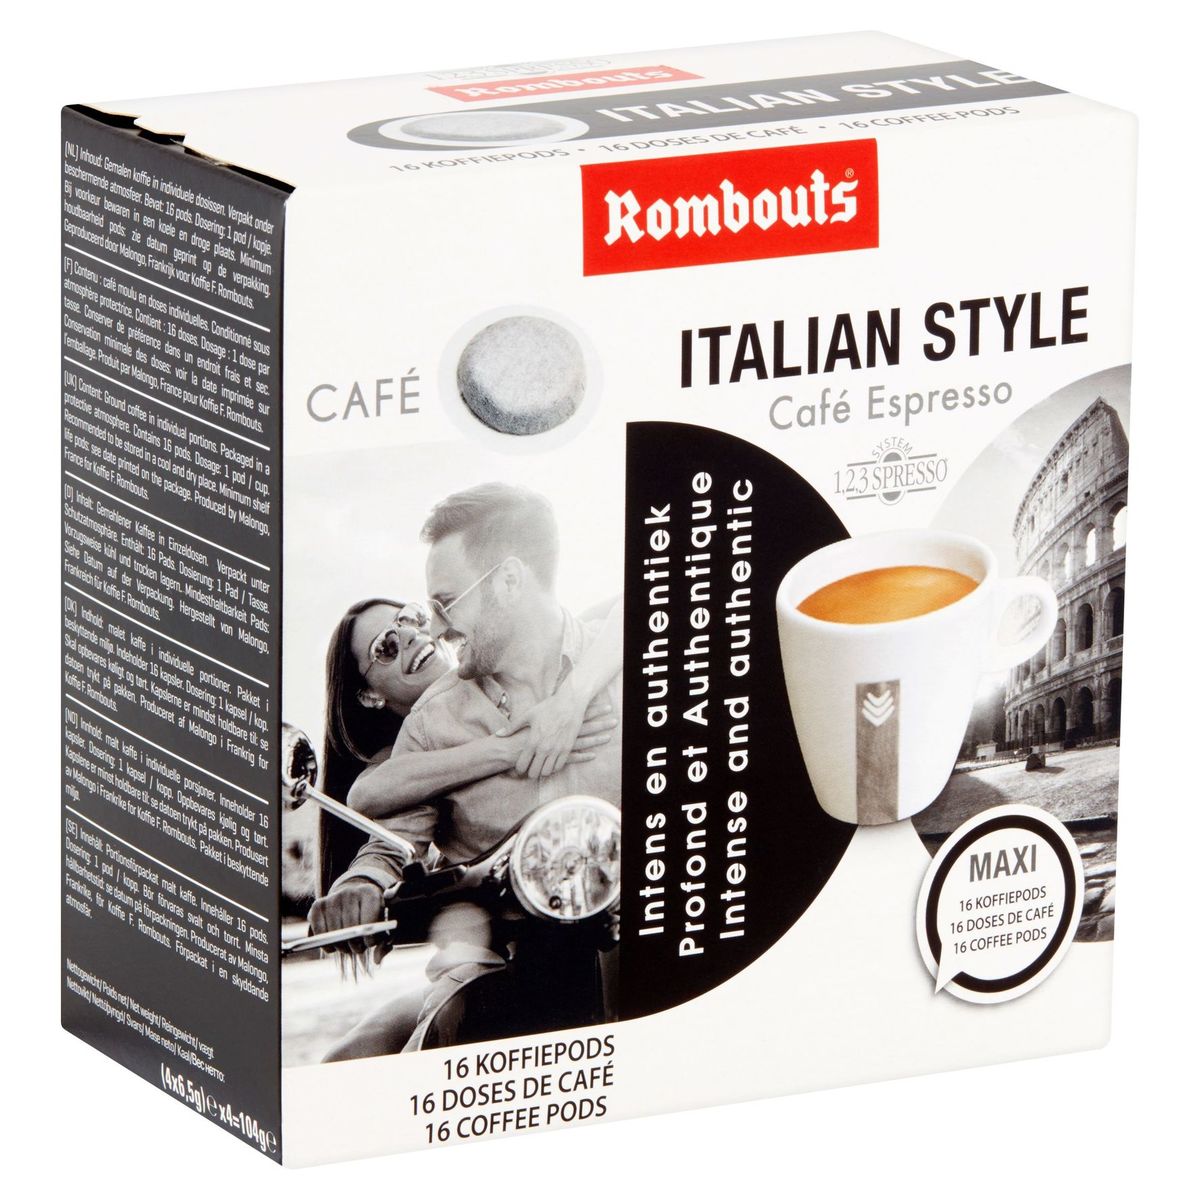 Rombouts Café Italian Style Café 16 Koffiepods 4 x 4 x 6.5 g